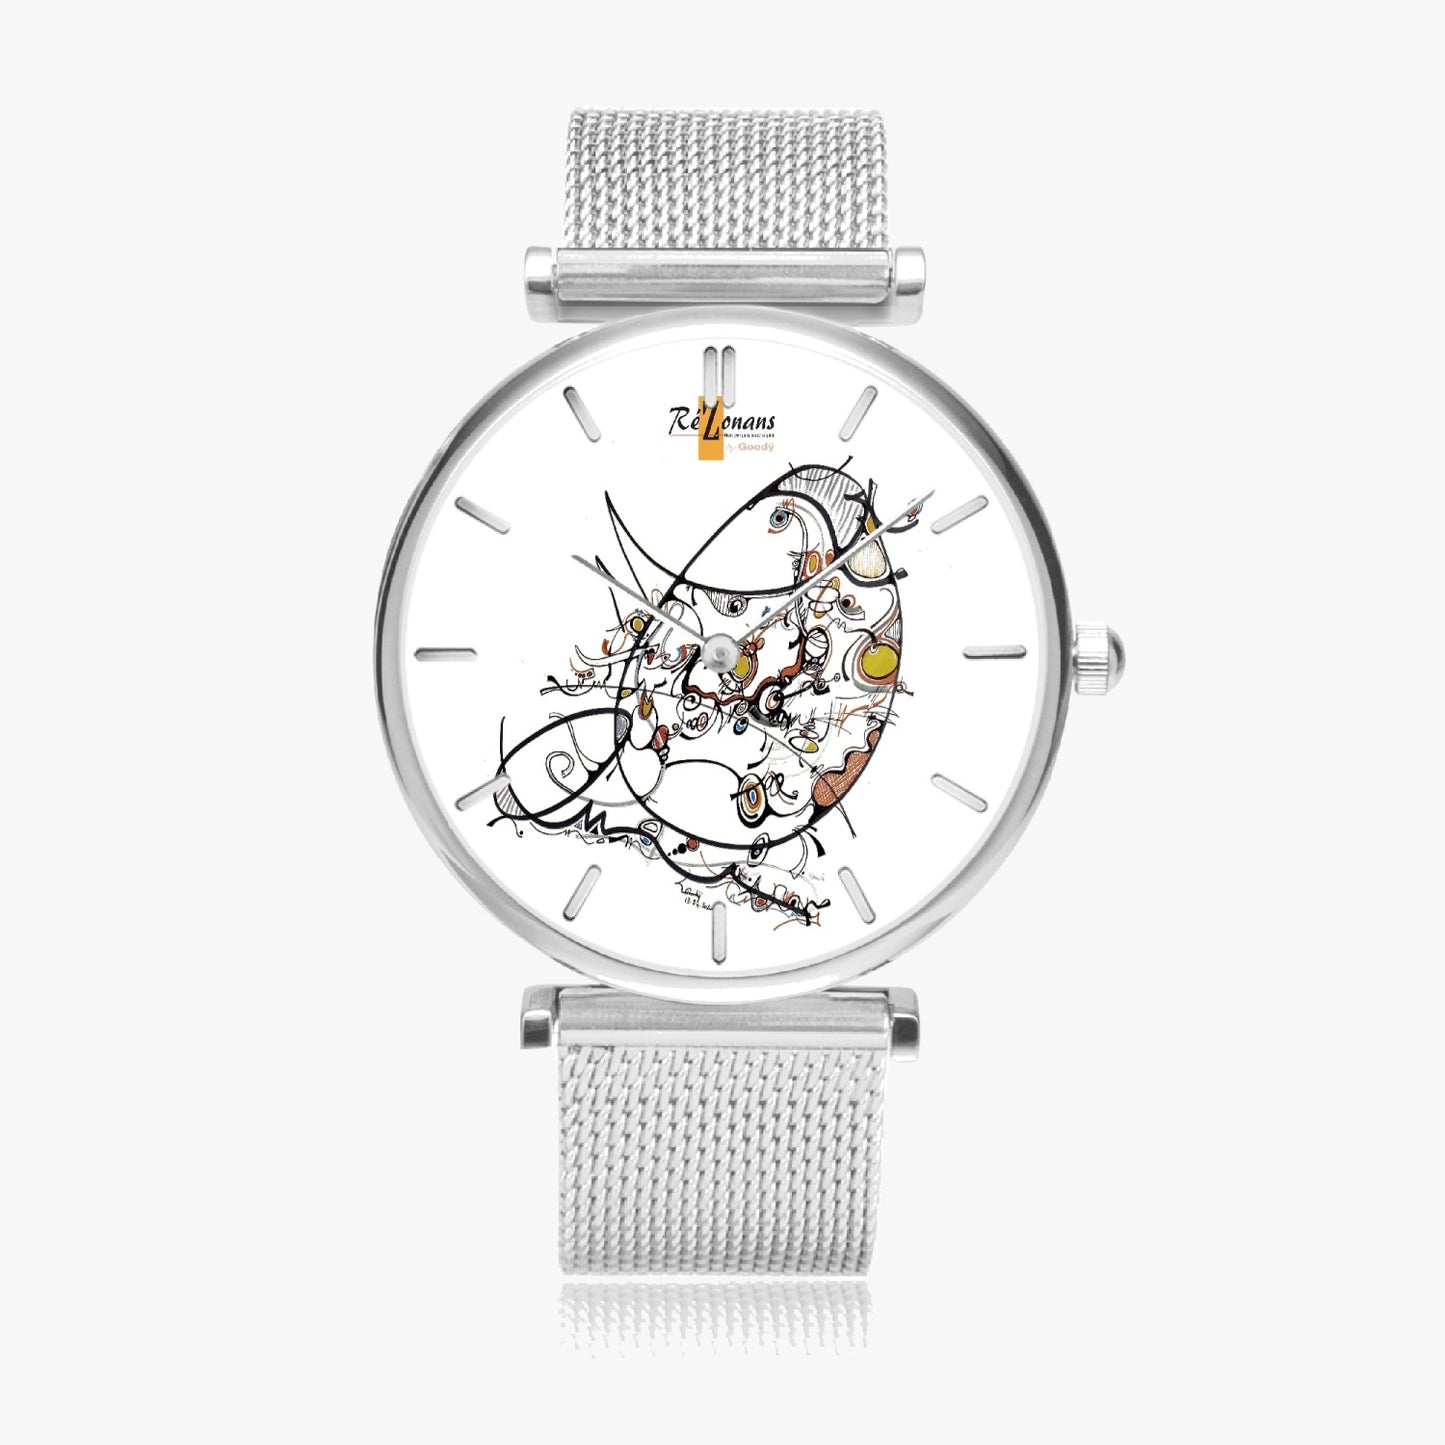 Ultra thin fashion quartz watch "Kaomonde" (with indicators)